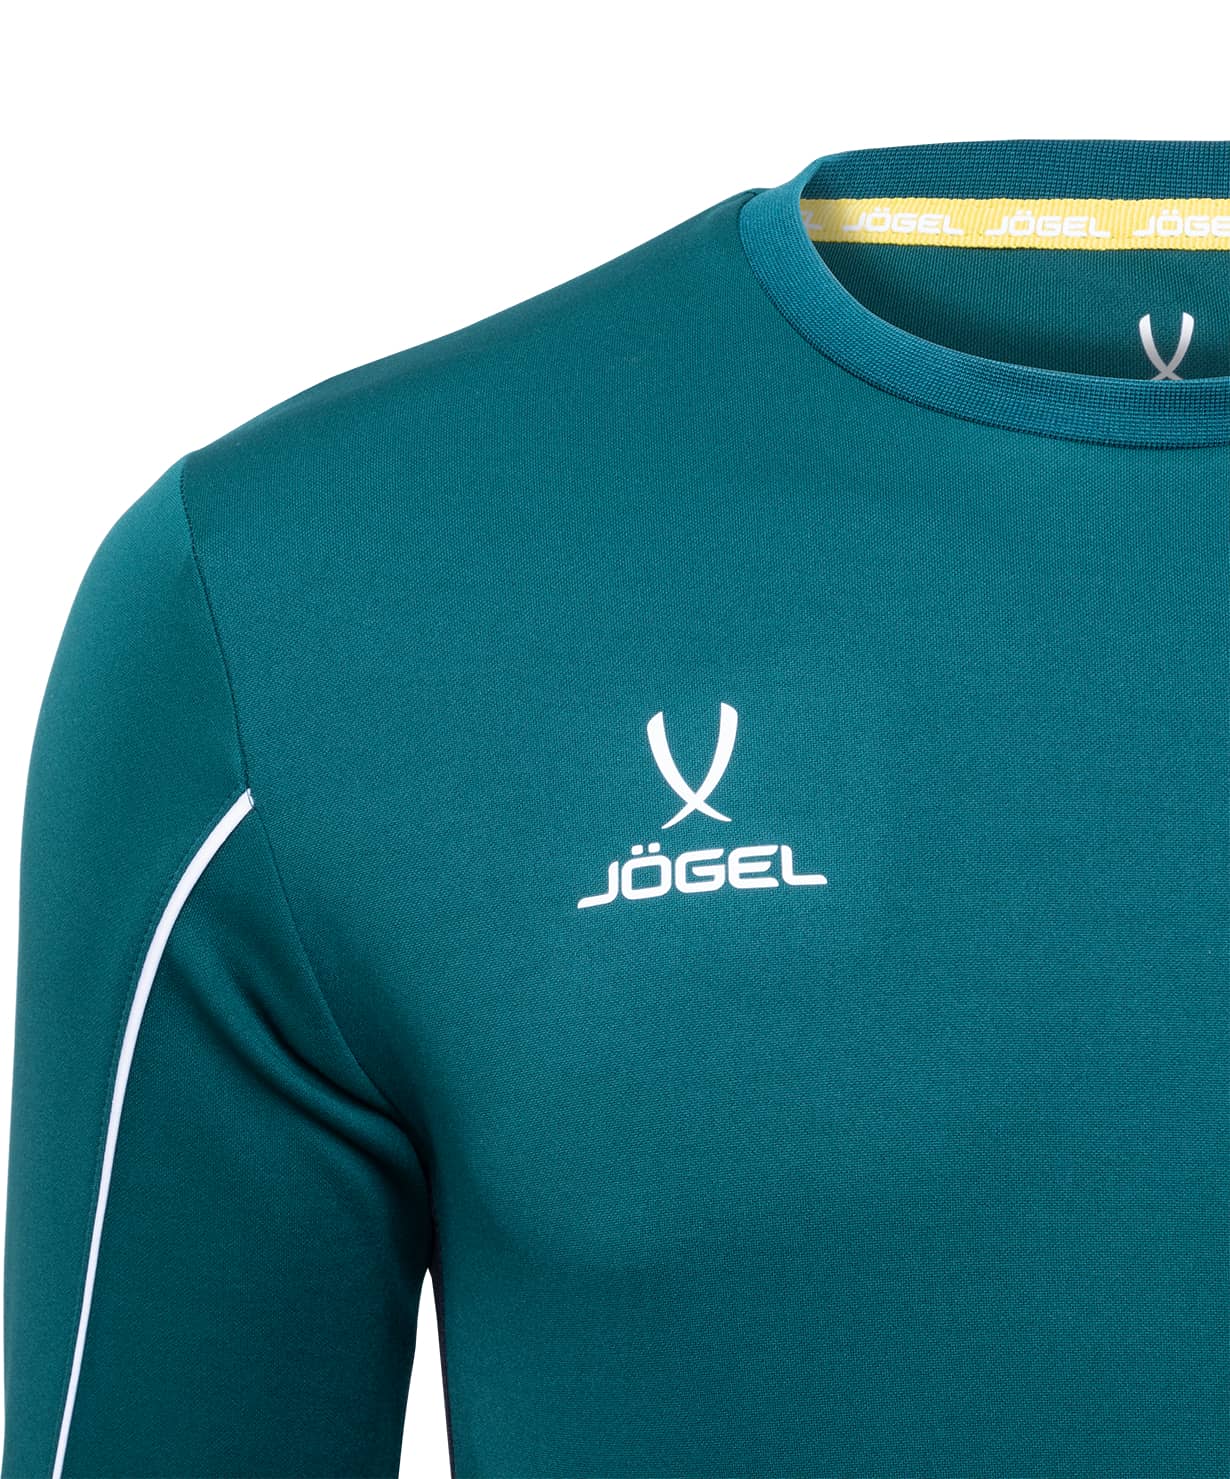 фото Jogel CAMP GK Padded LS свитер вратаря зеленый Football-54 